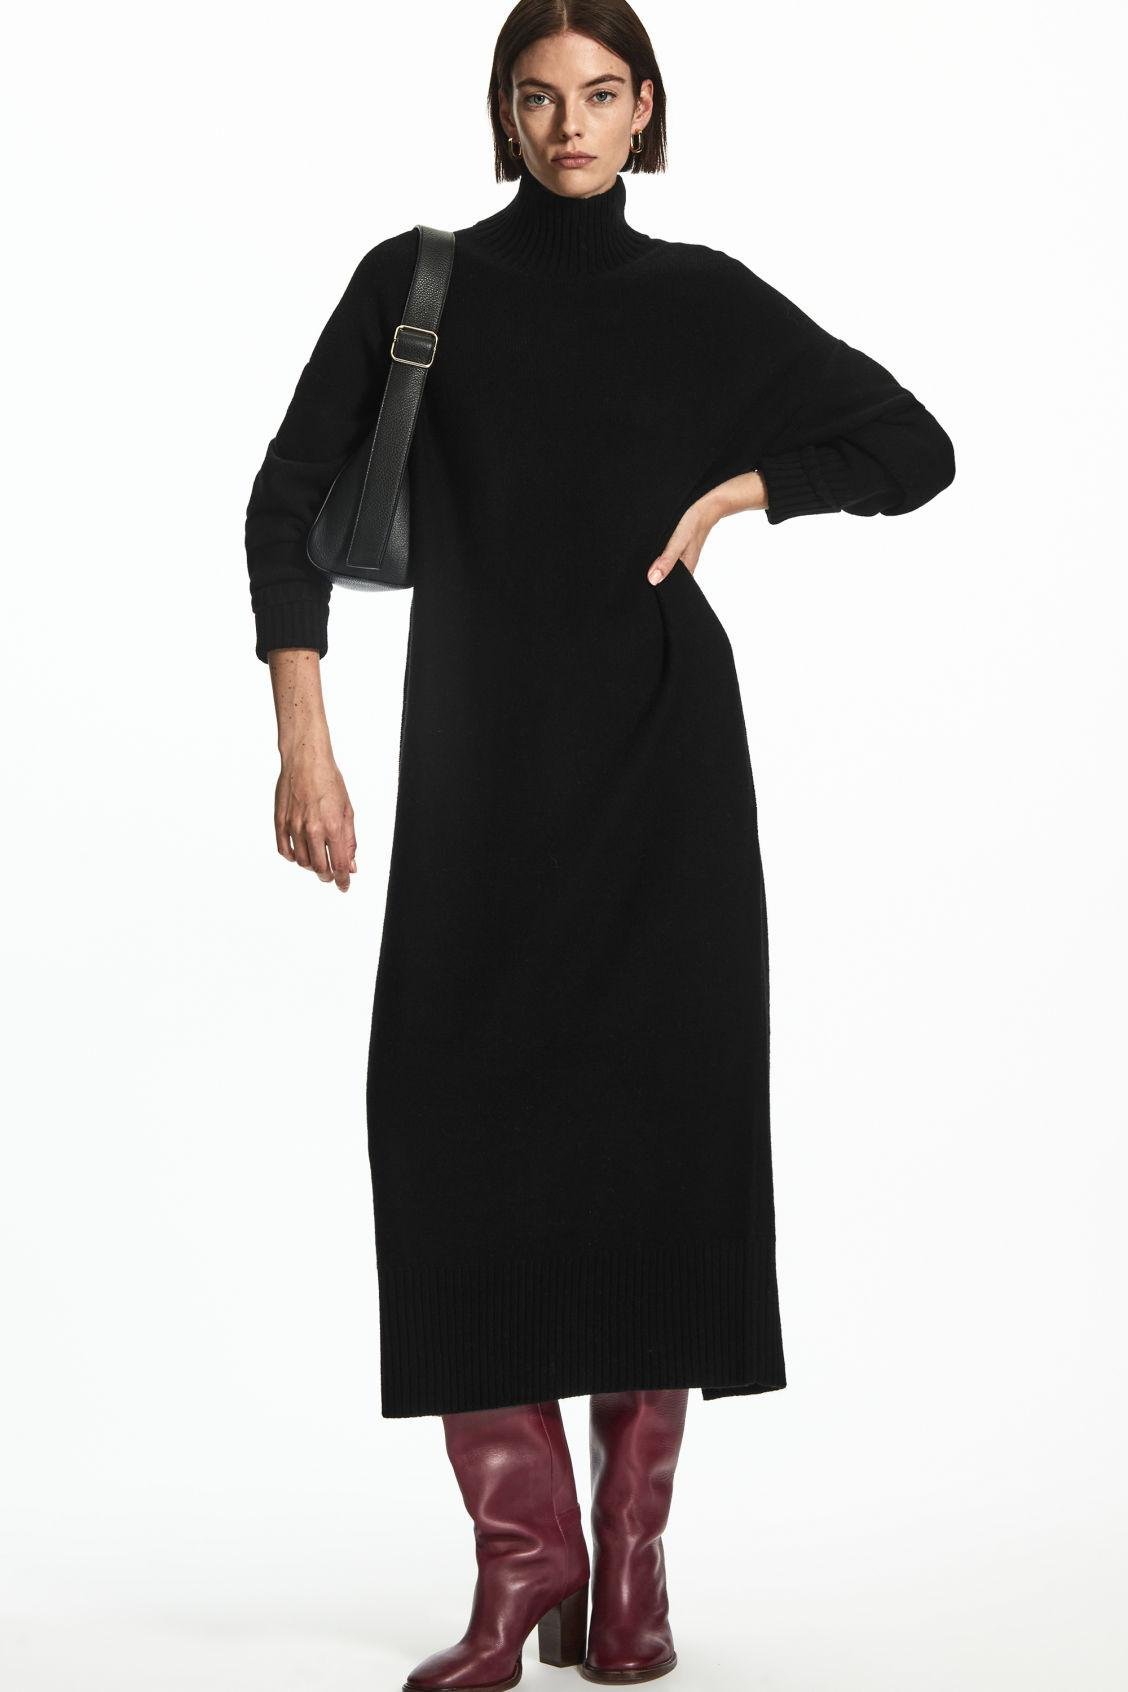 COS Longline Knitted Dress in Black